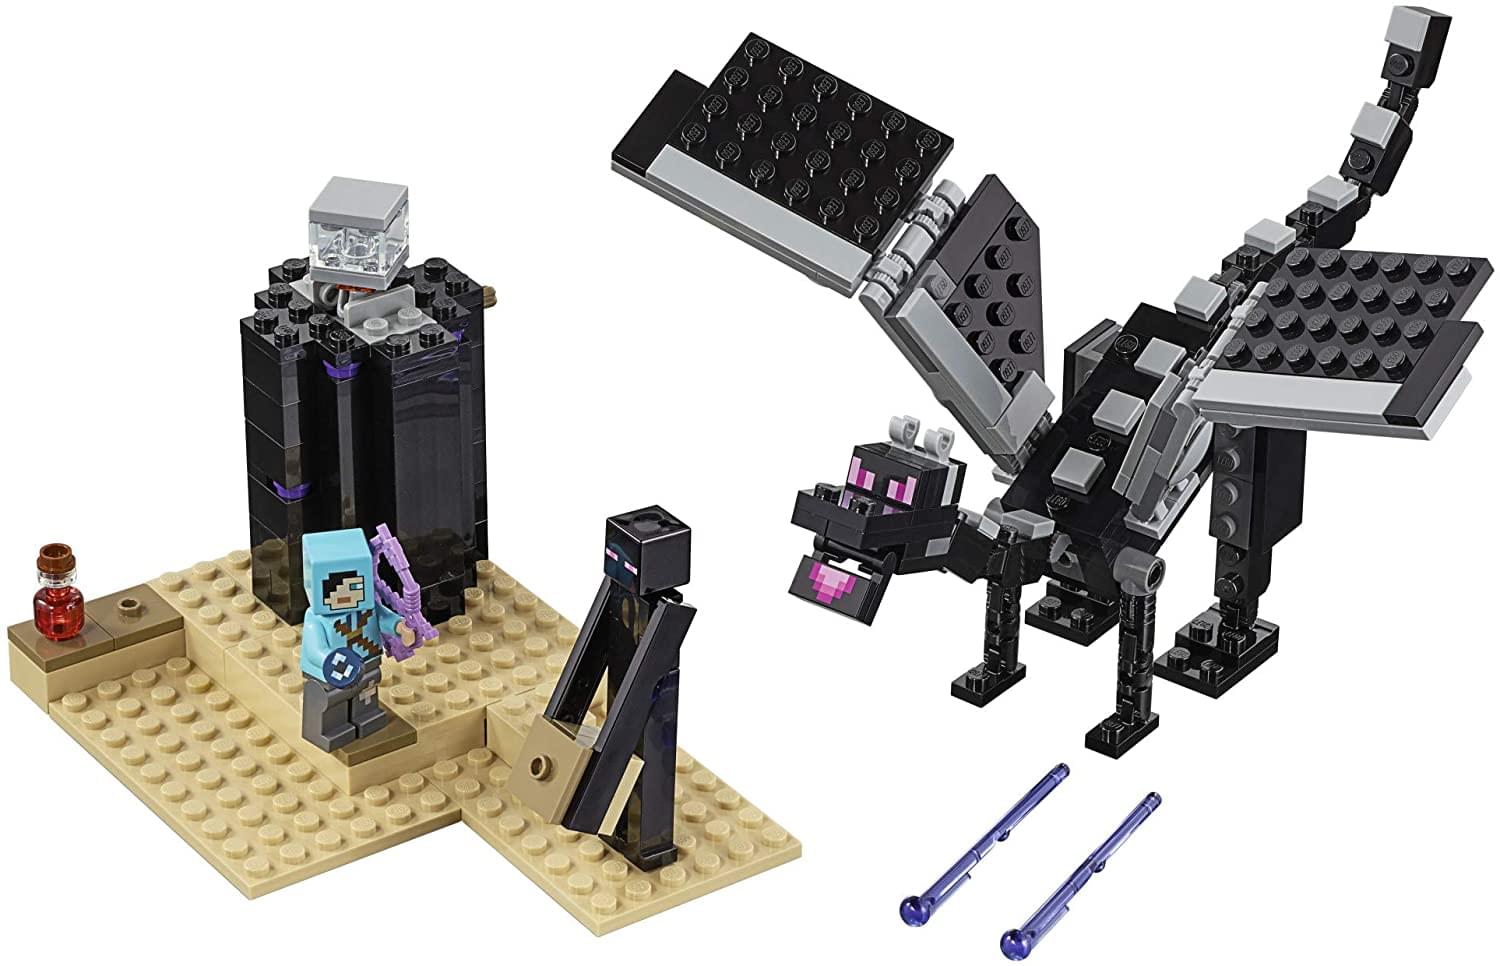 LEGO Minecraft The End Battle 21151 | 222 Piece Building Kit